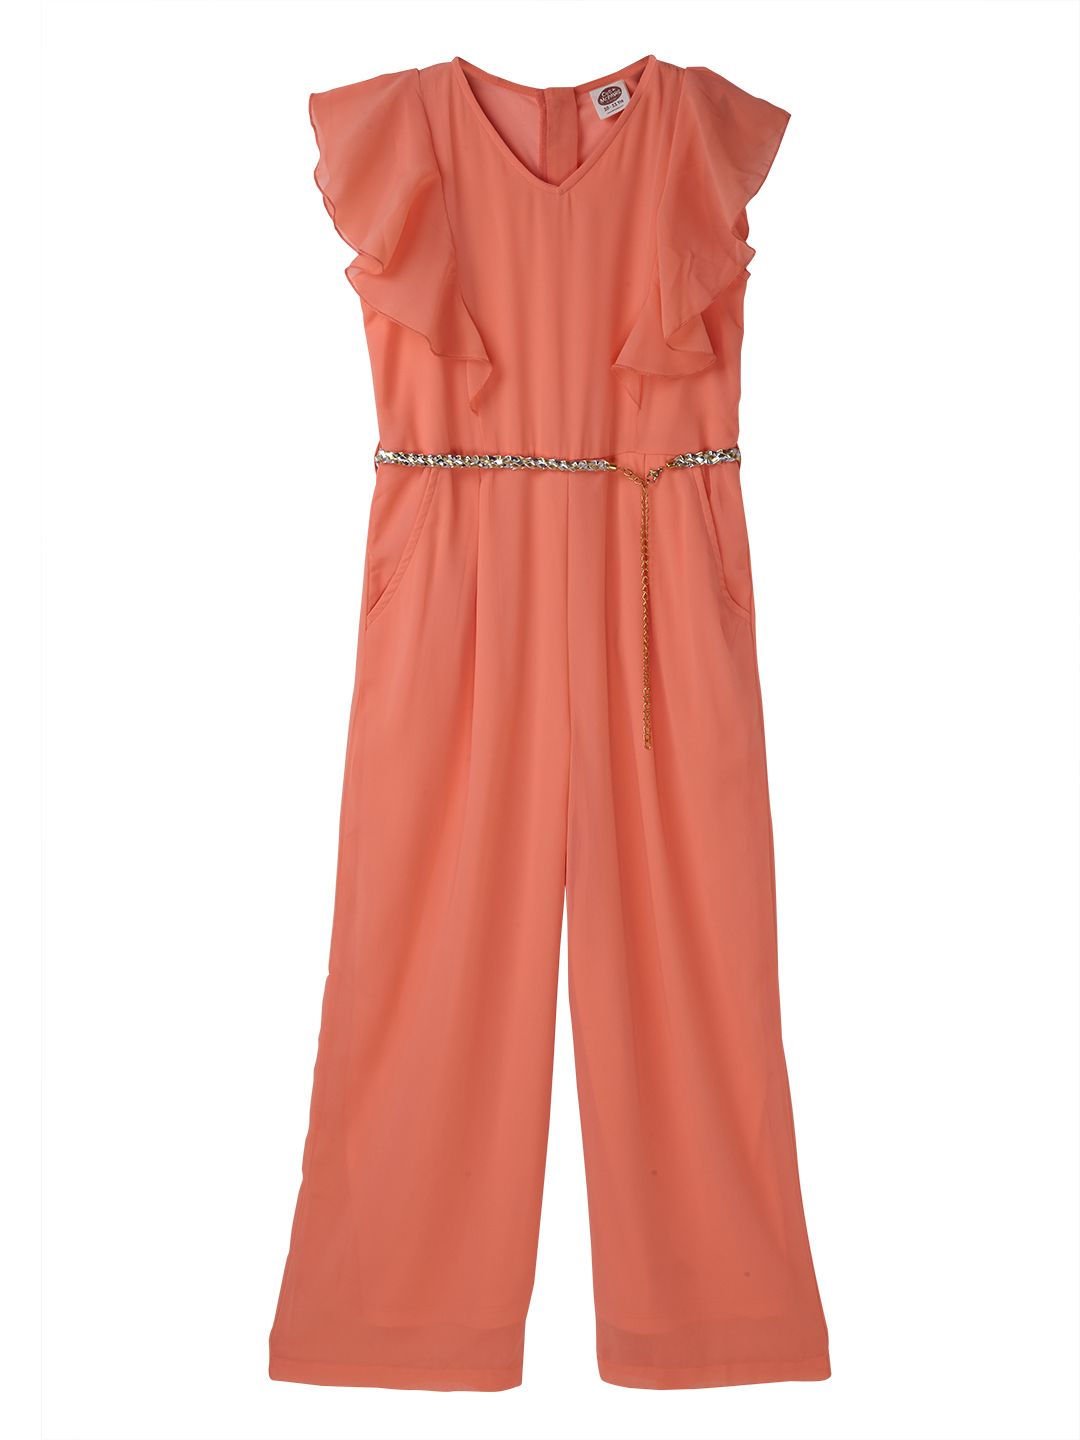 Shop Online Orange Jumpsuit for Upto 14 Years Girls